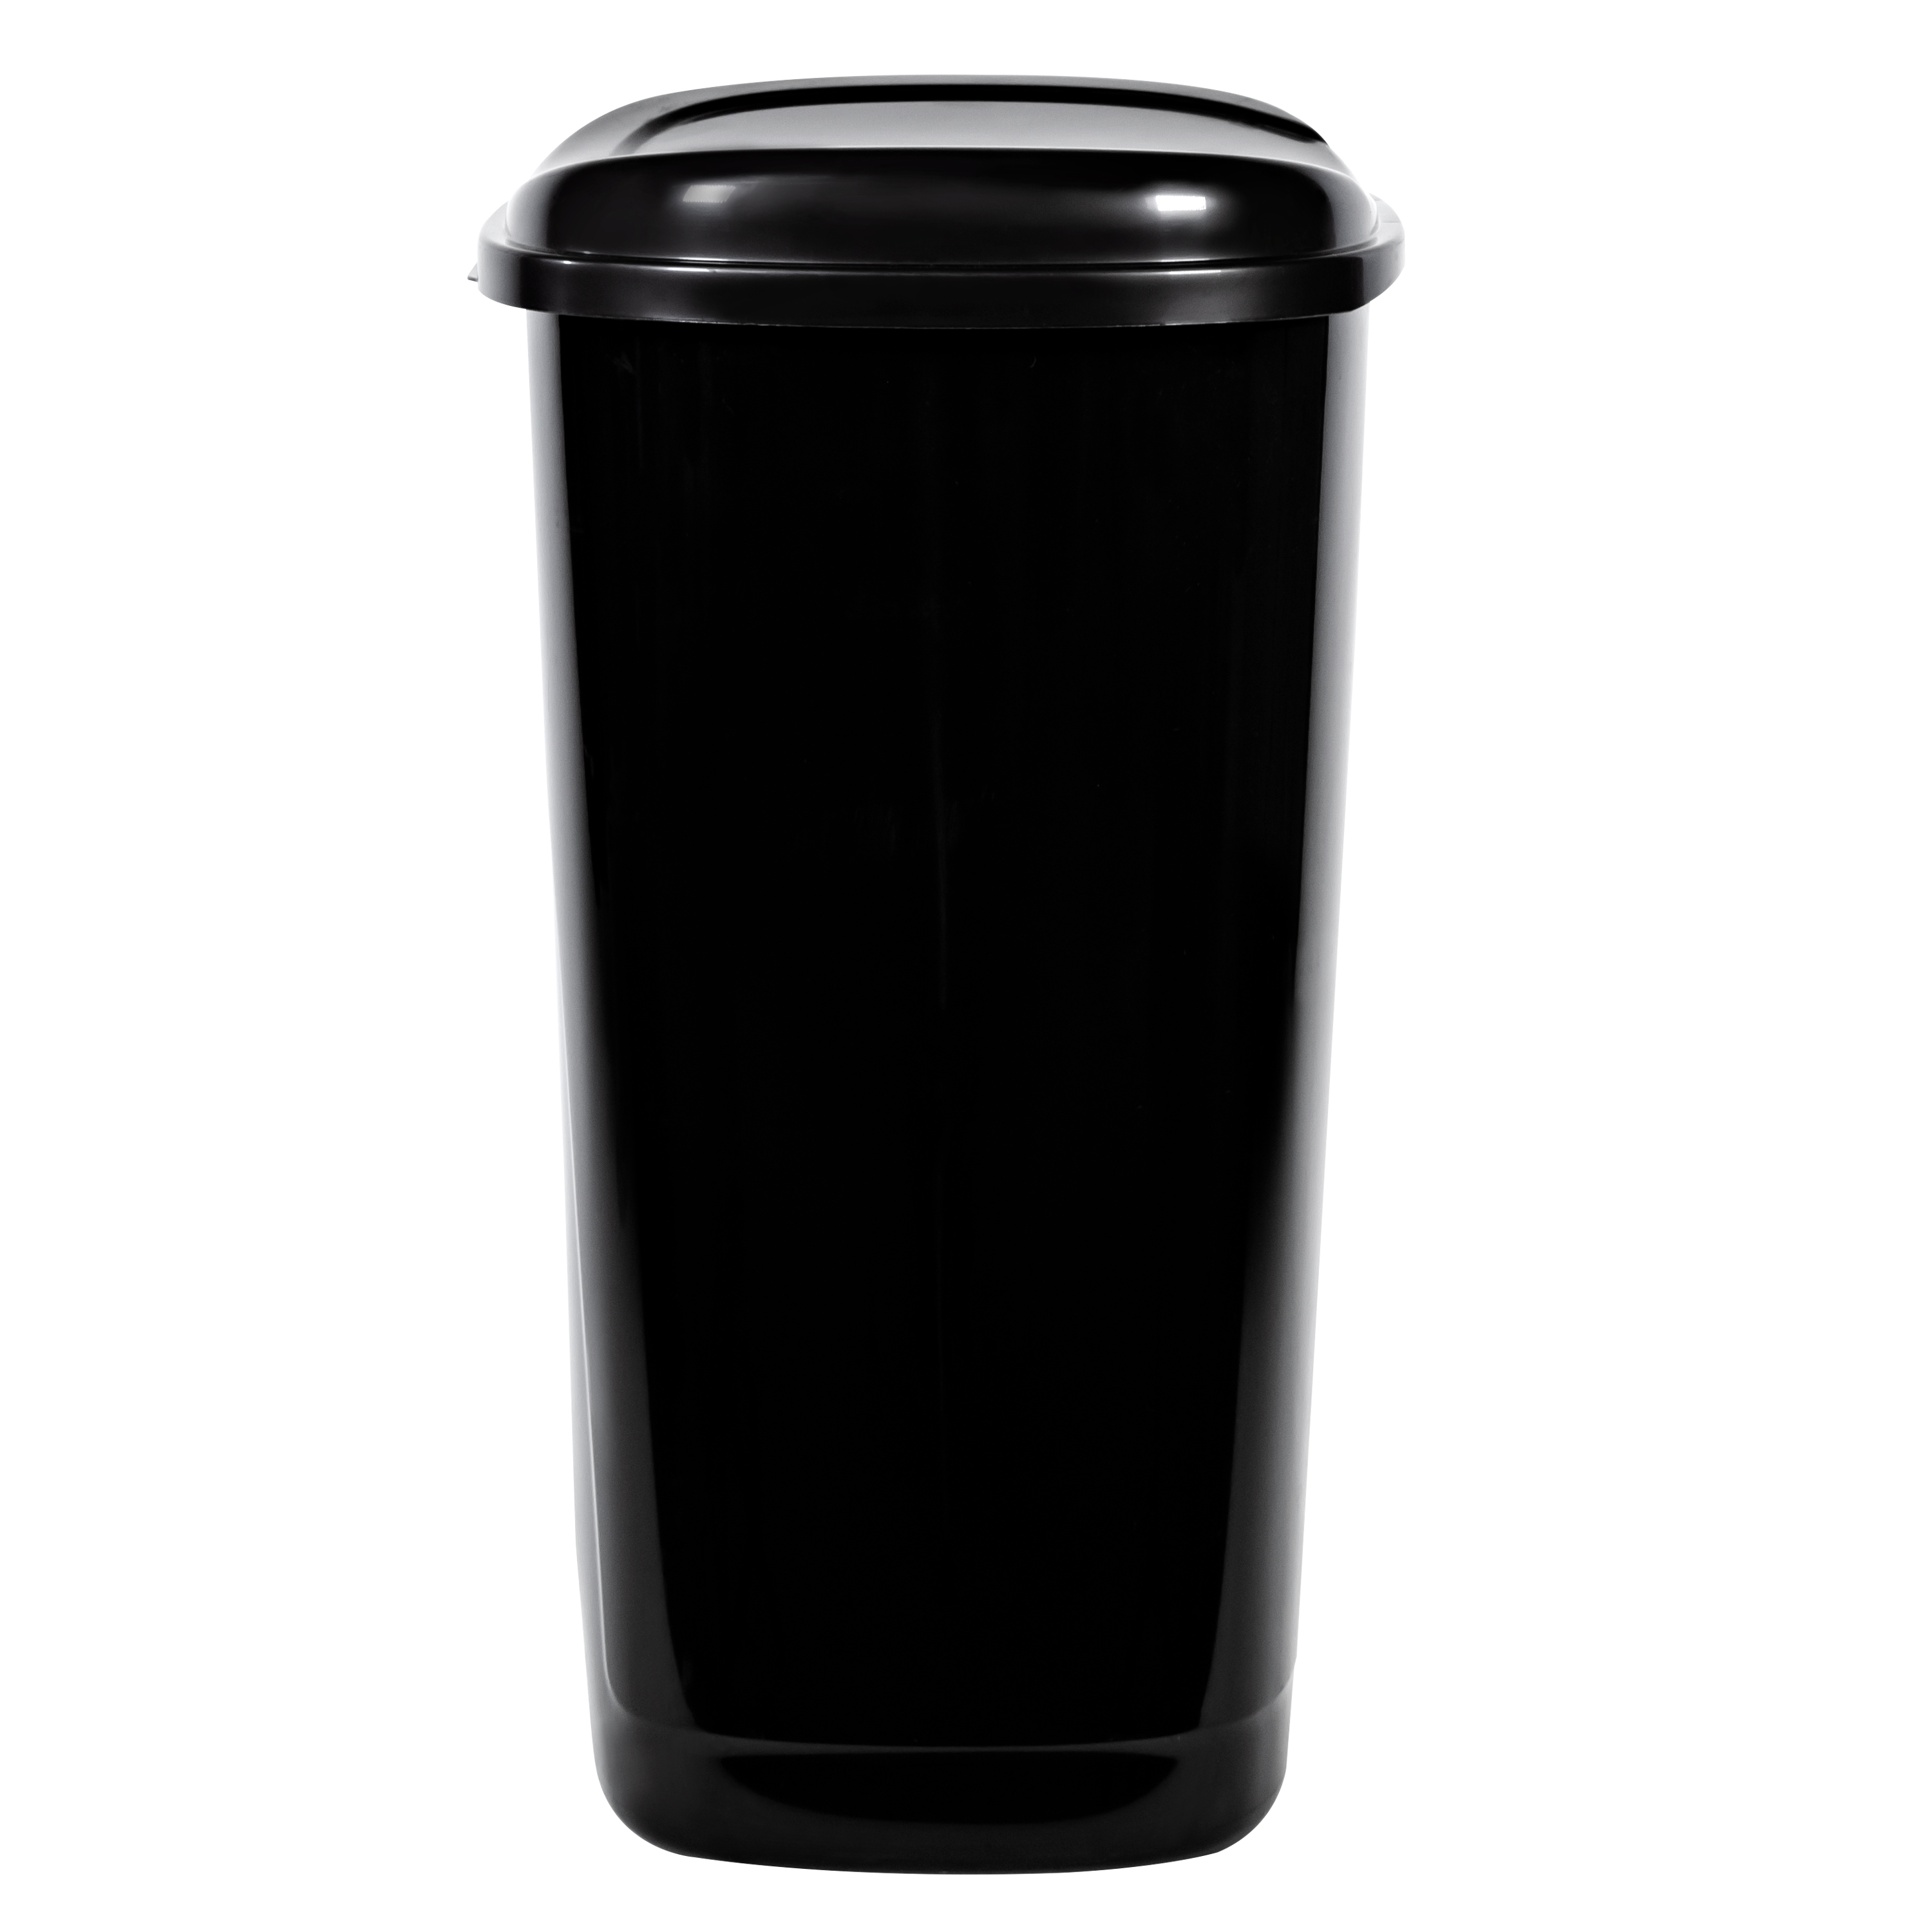 Hefty StepOn Ktichen Garbage Can, High Polish Black, 13 gal - image 3 of 4